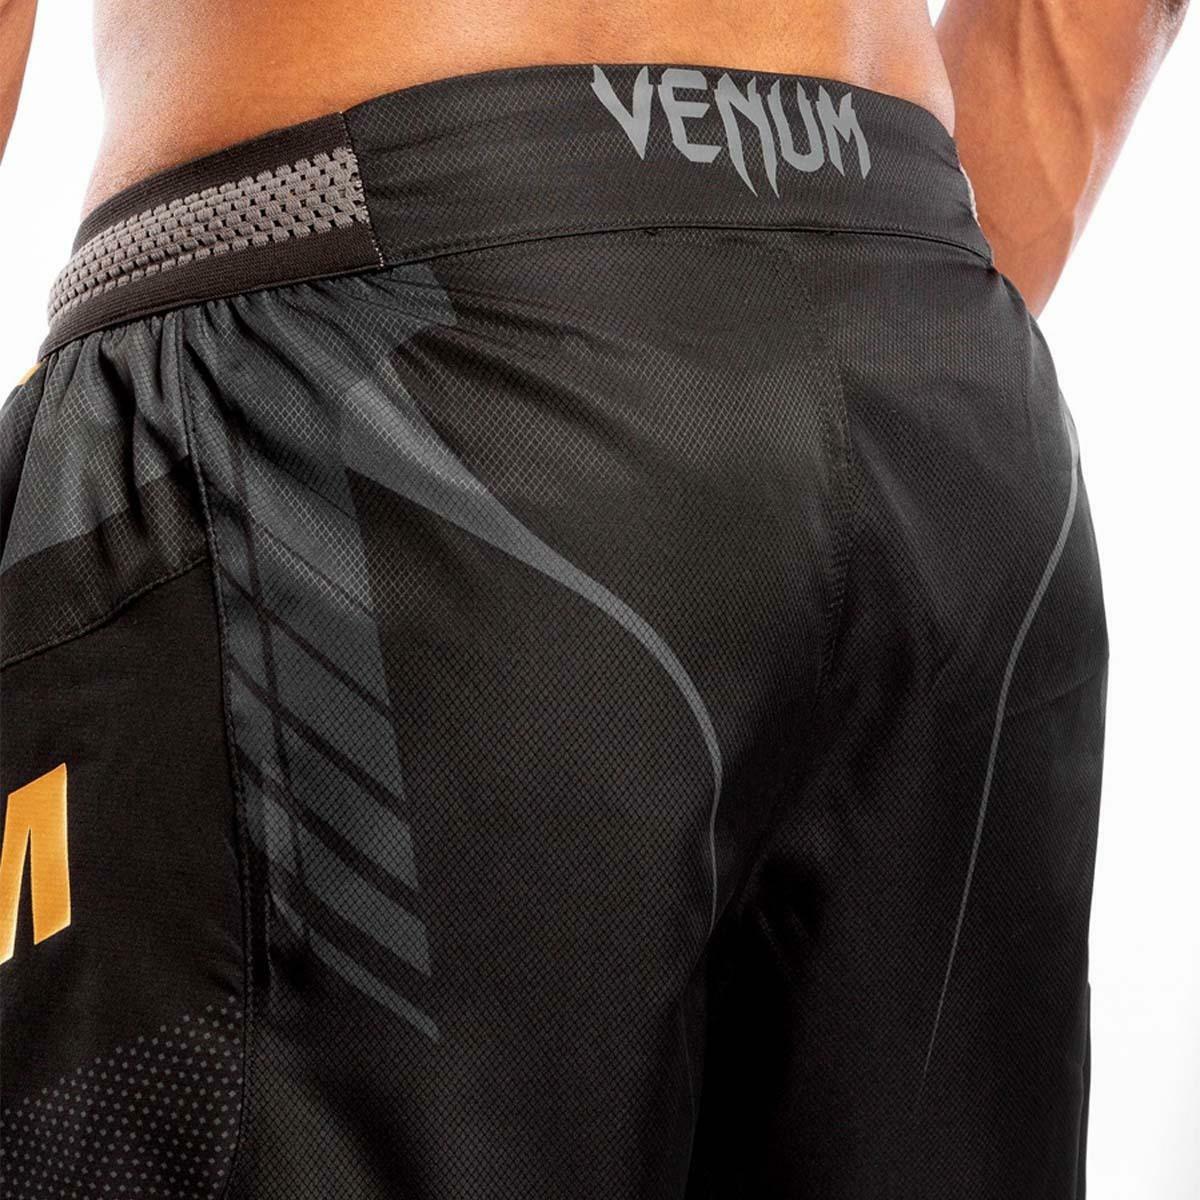 Venum Athletics Fight Shorts Black/Gold VEN-04285-126